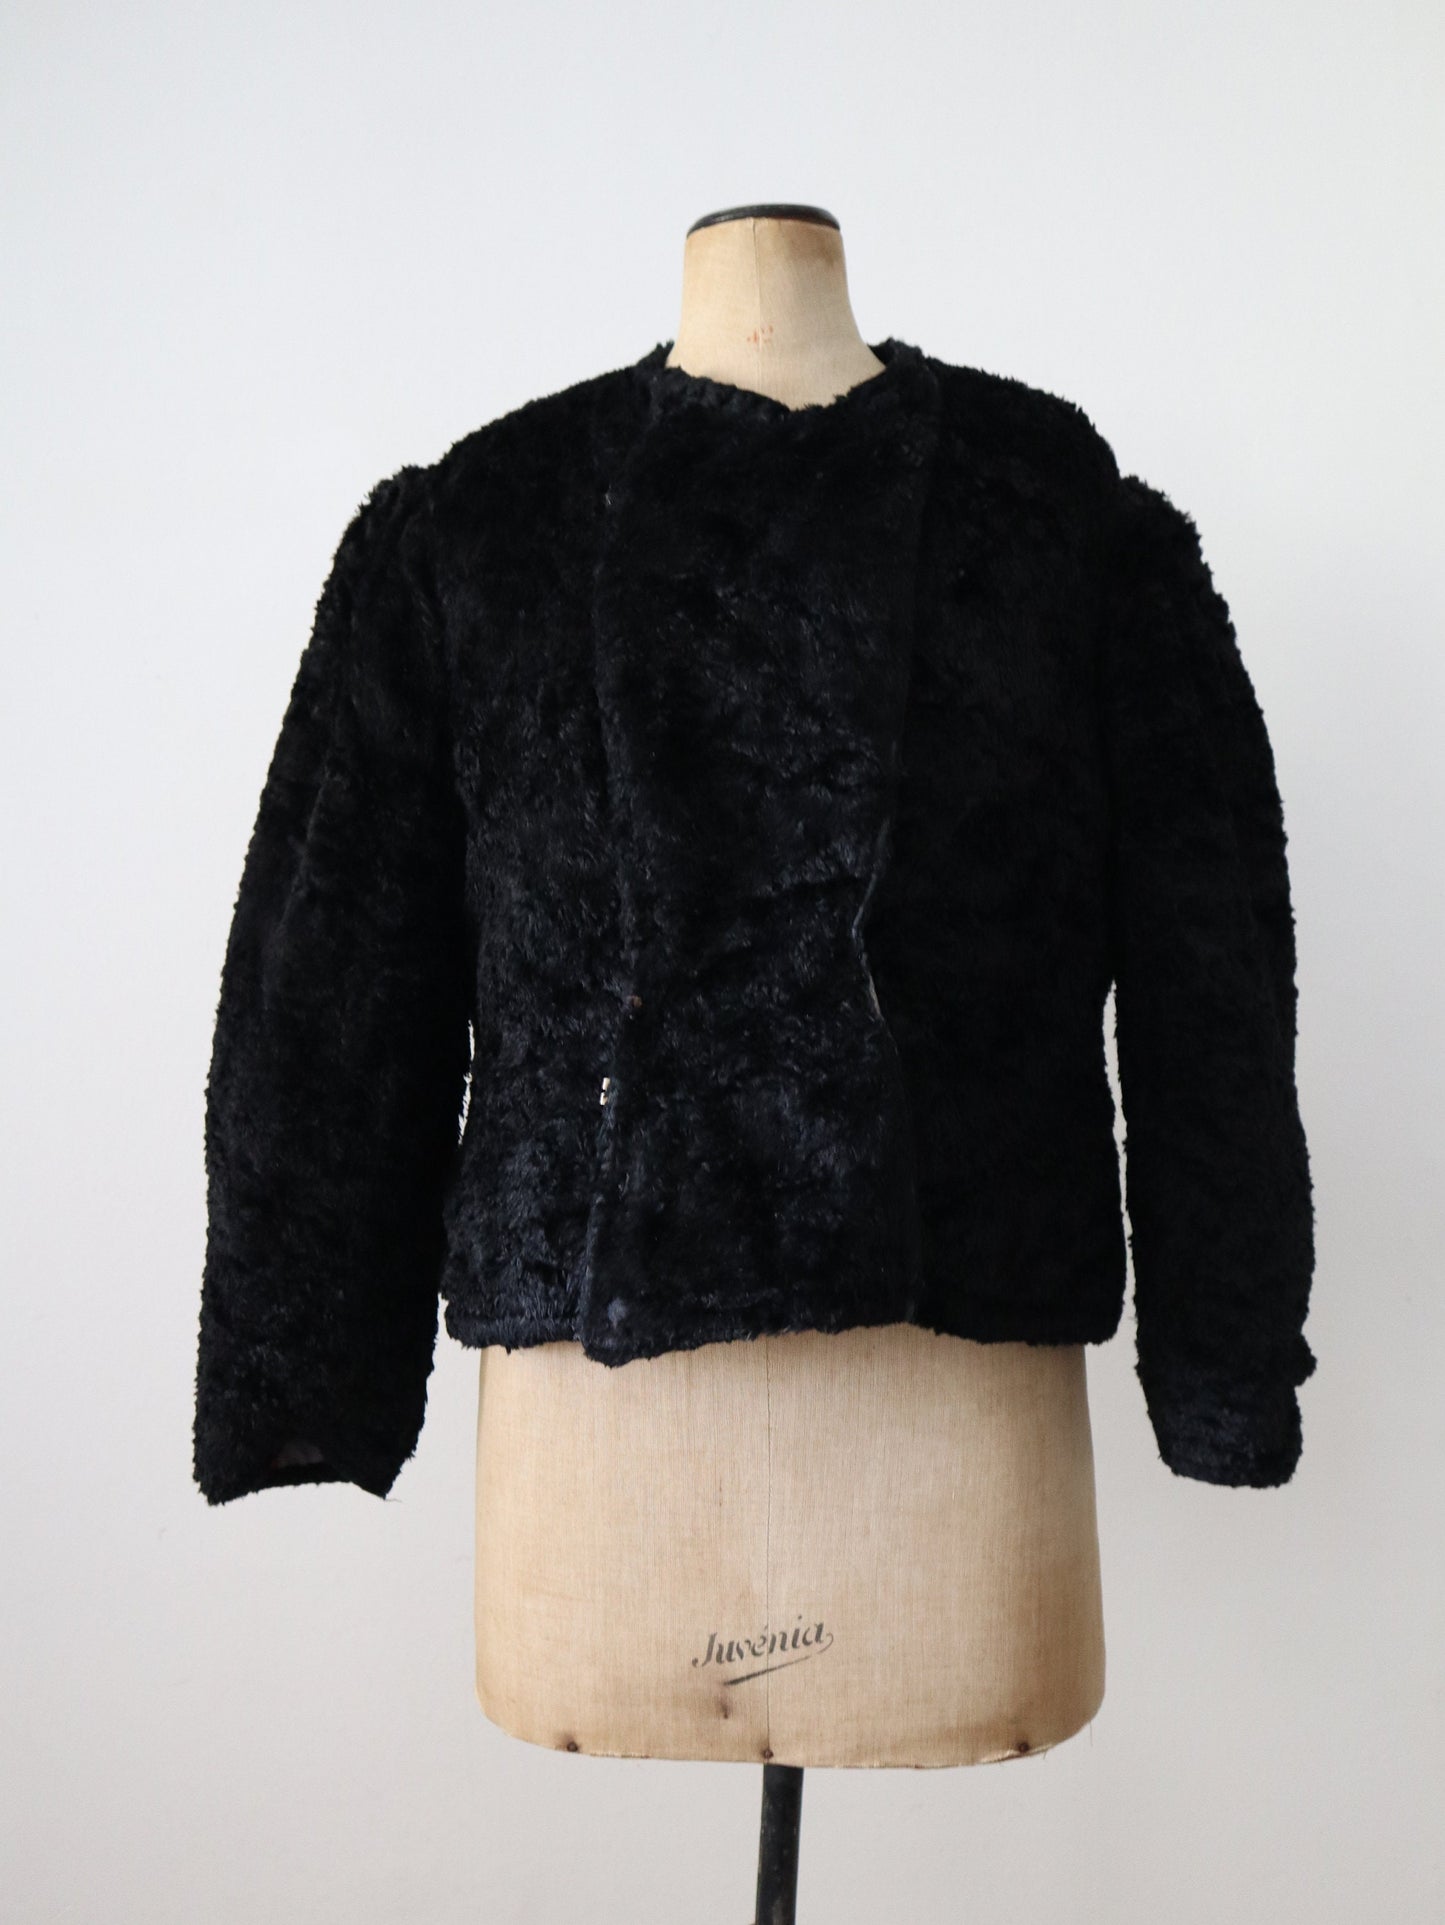 1930s Hungarian Folk Jacket black Velvet Burgundy Grey Stripe Cotton Lining